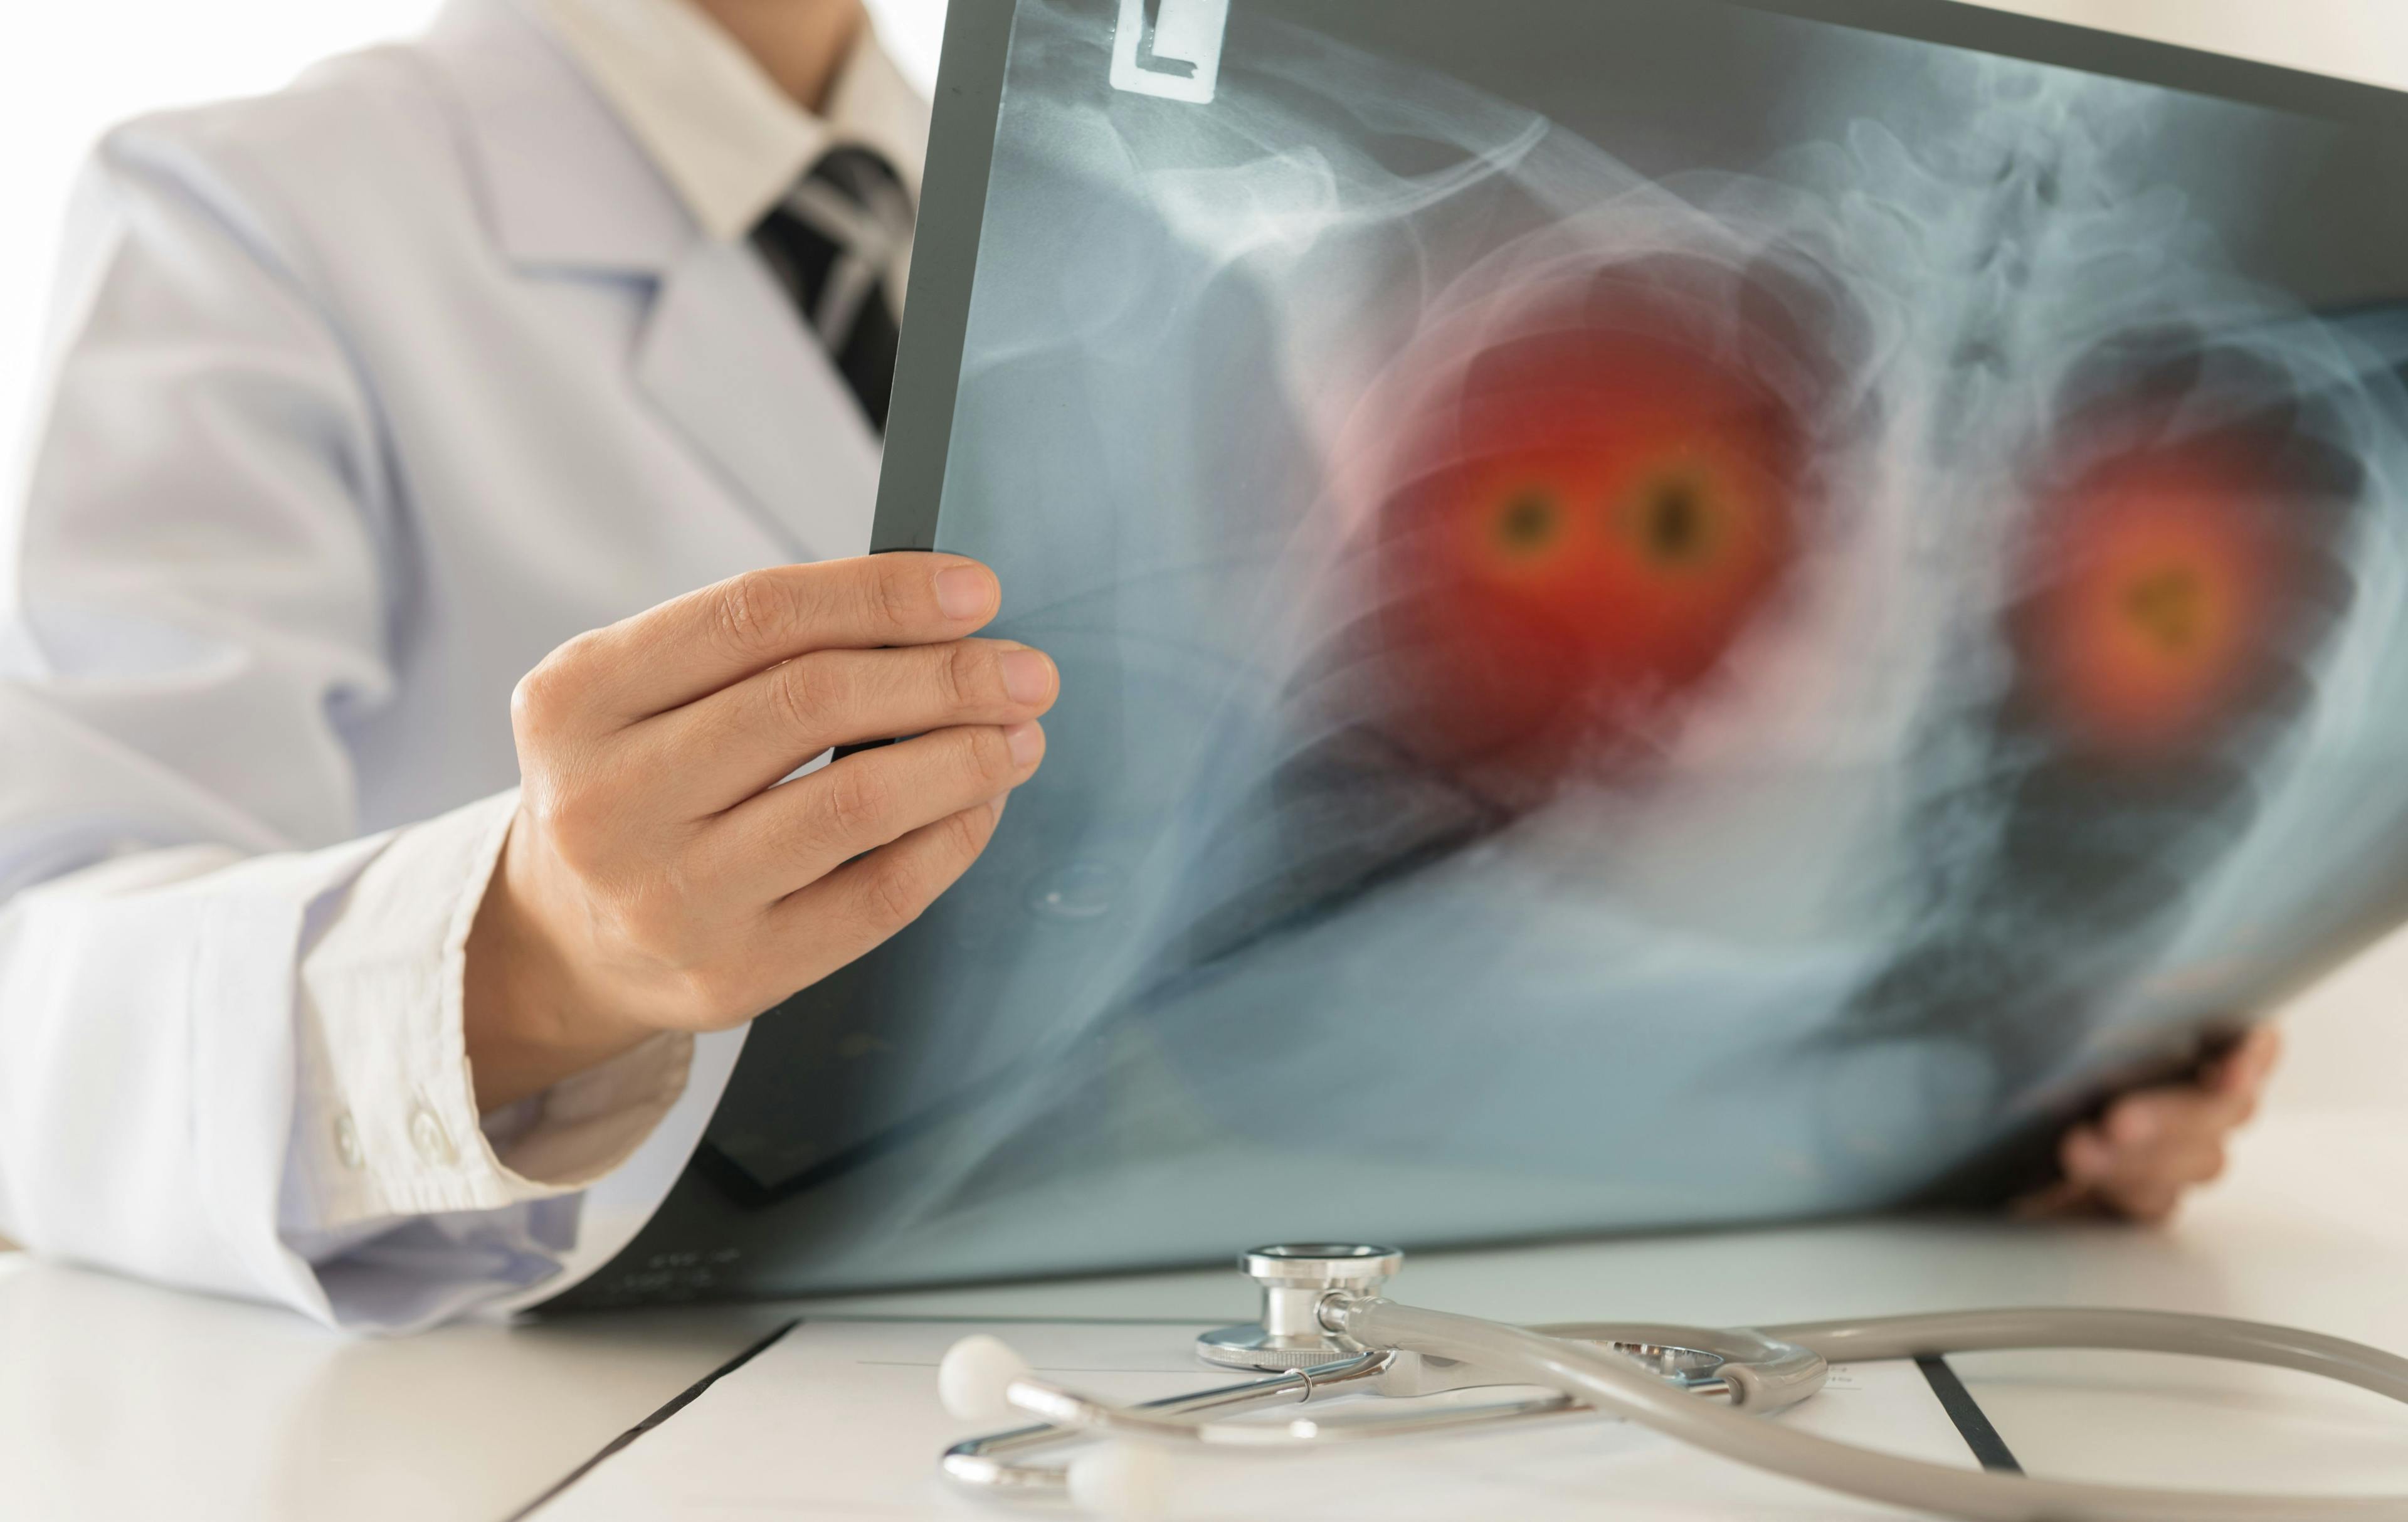 radiology x-ray lung cancer - Image credit: utah51 | stock.adobe.com